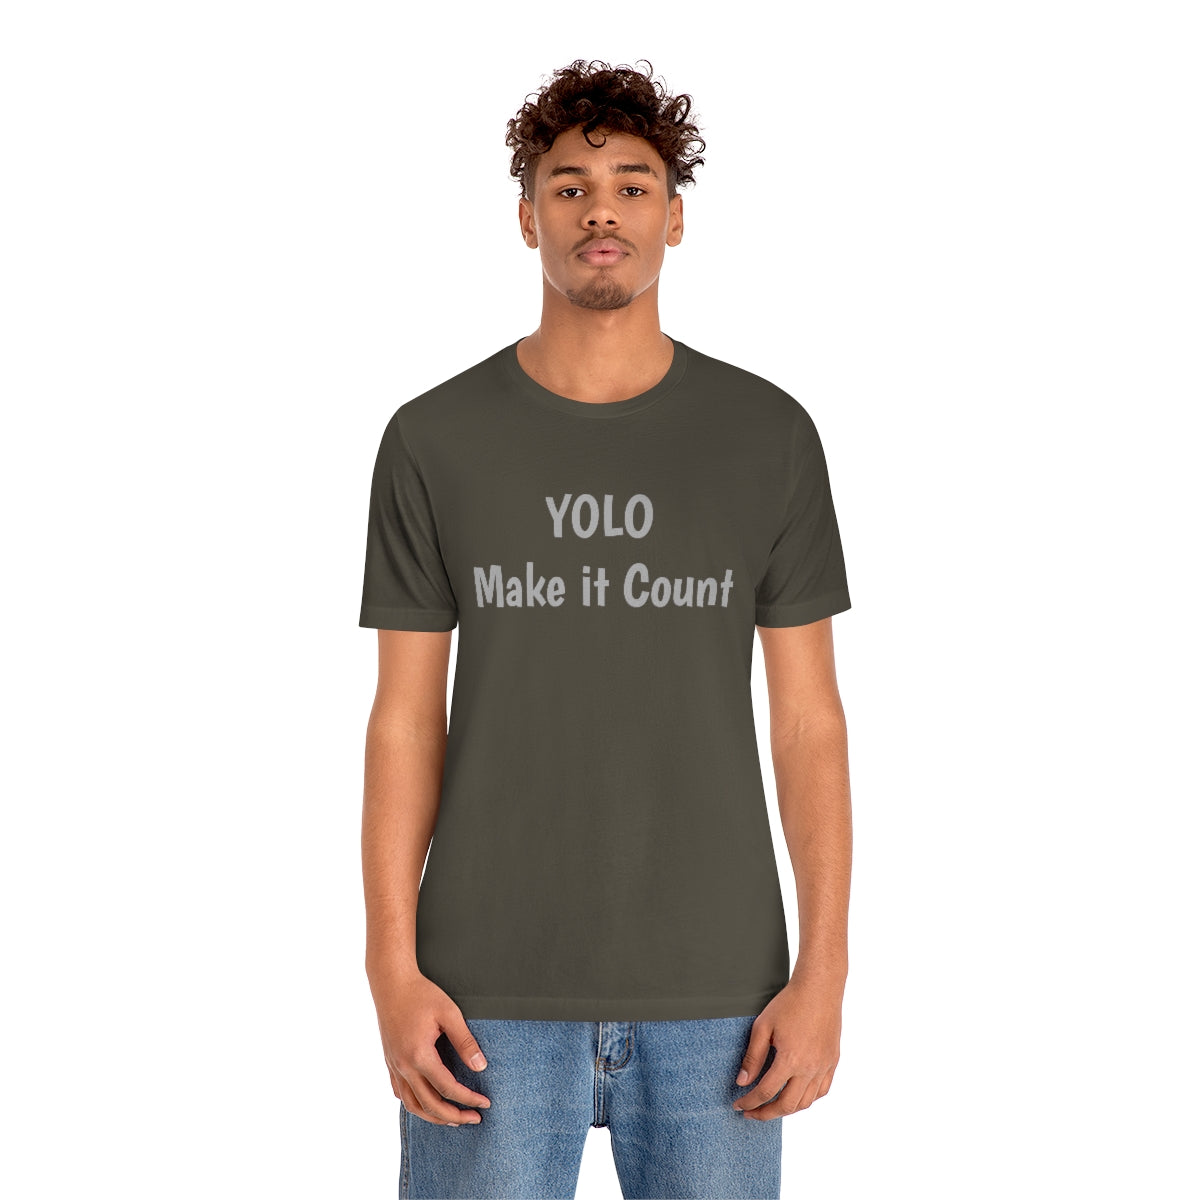 YOLO Make it Count - Unisex Jersey Short Sleeve Tee